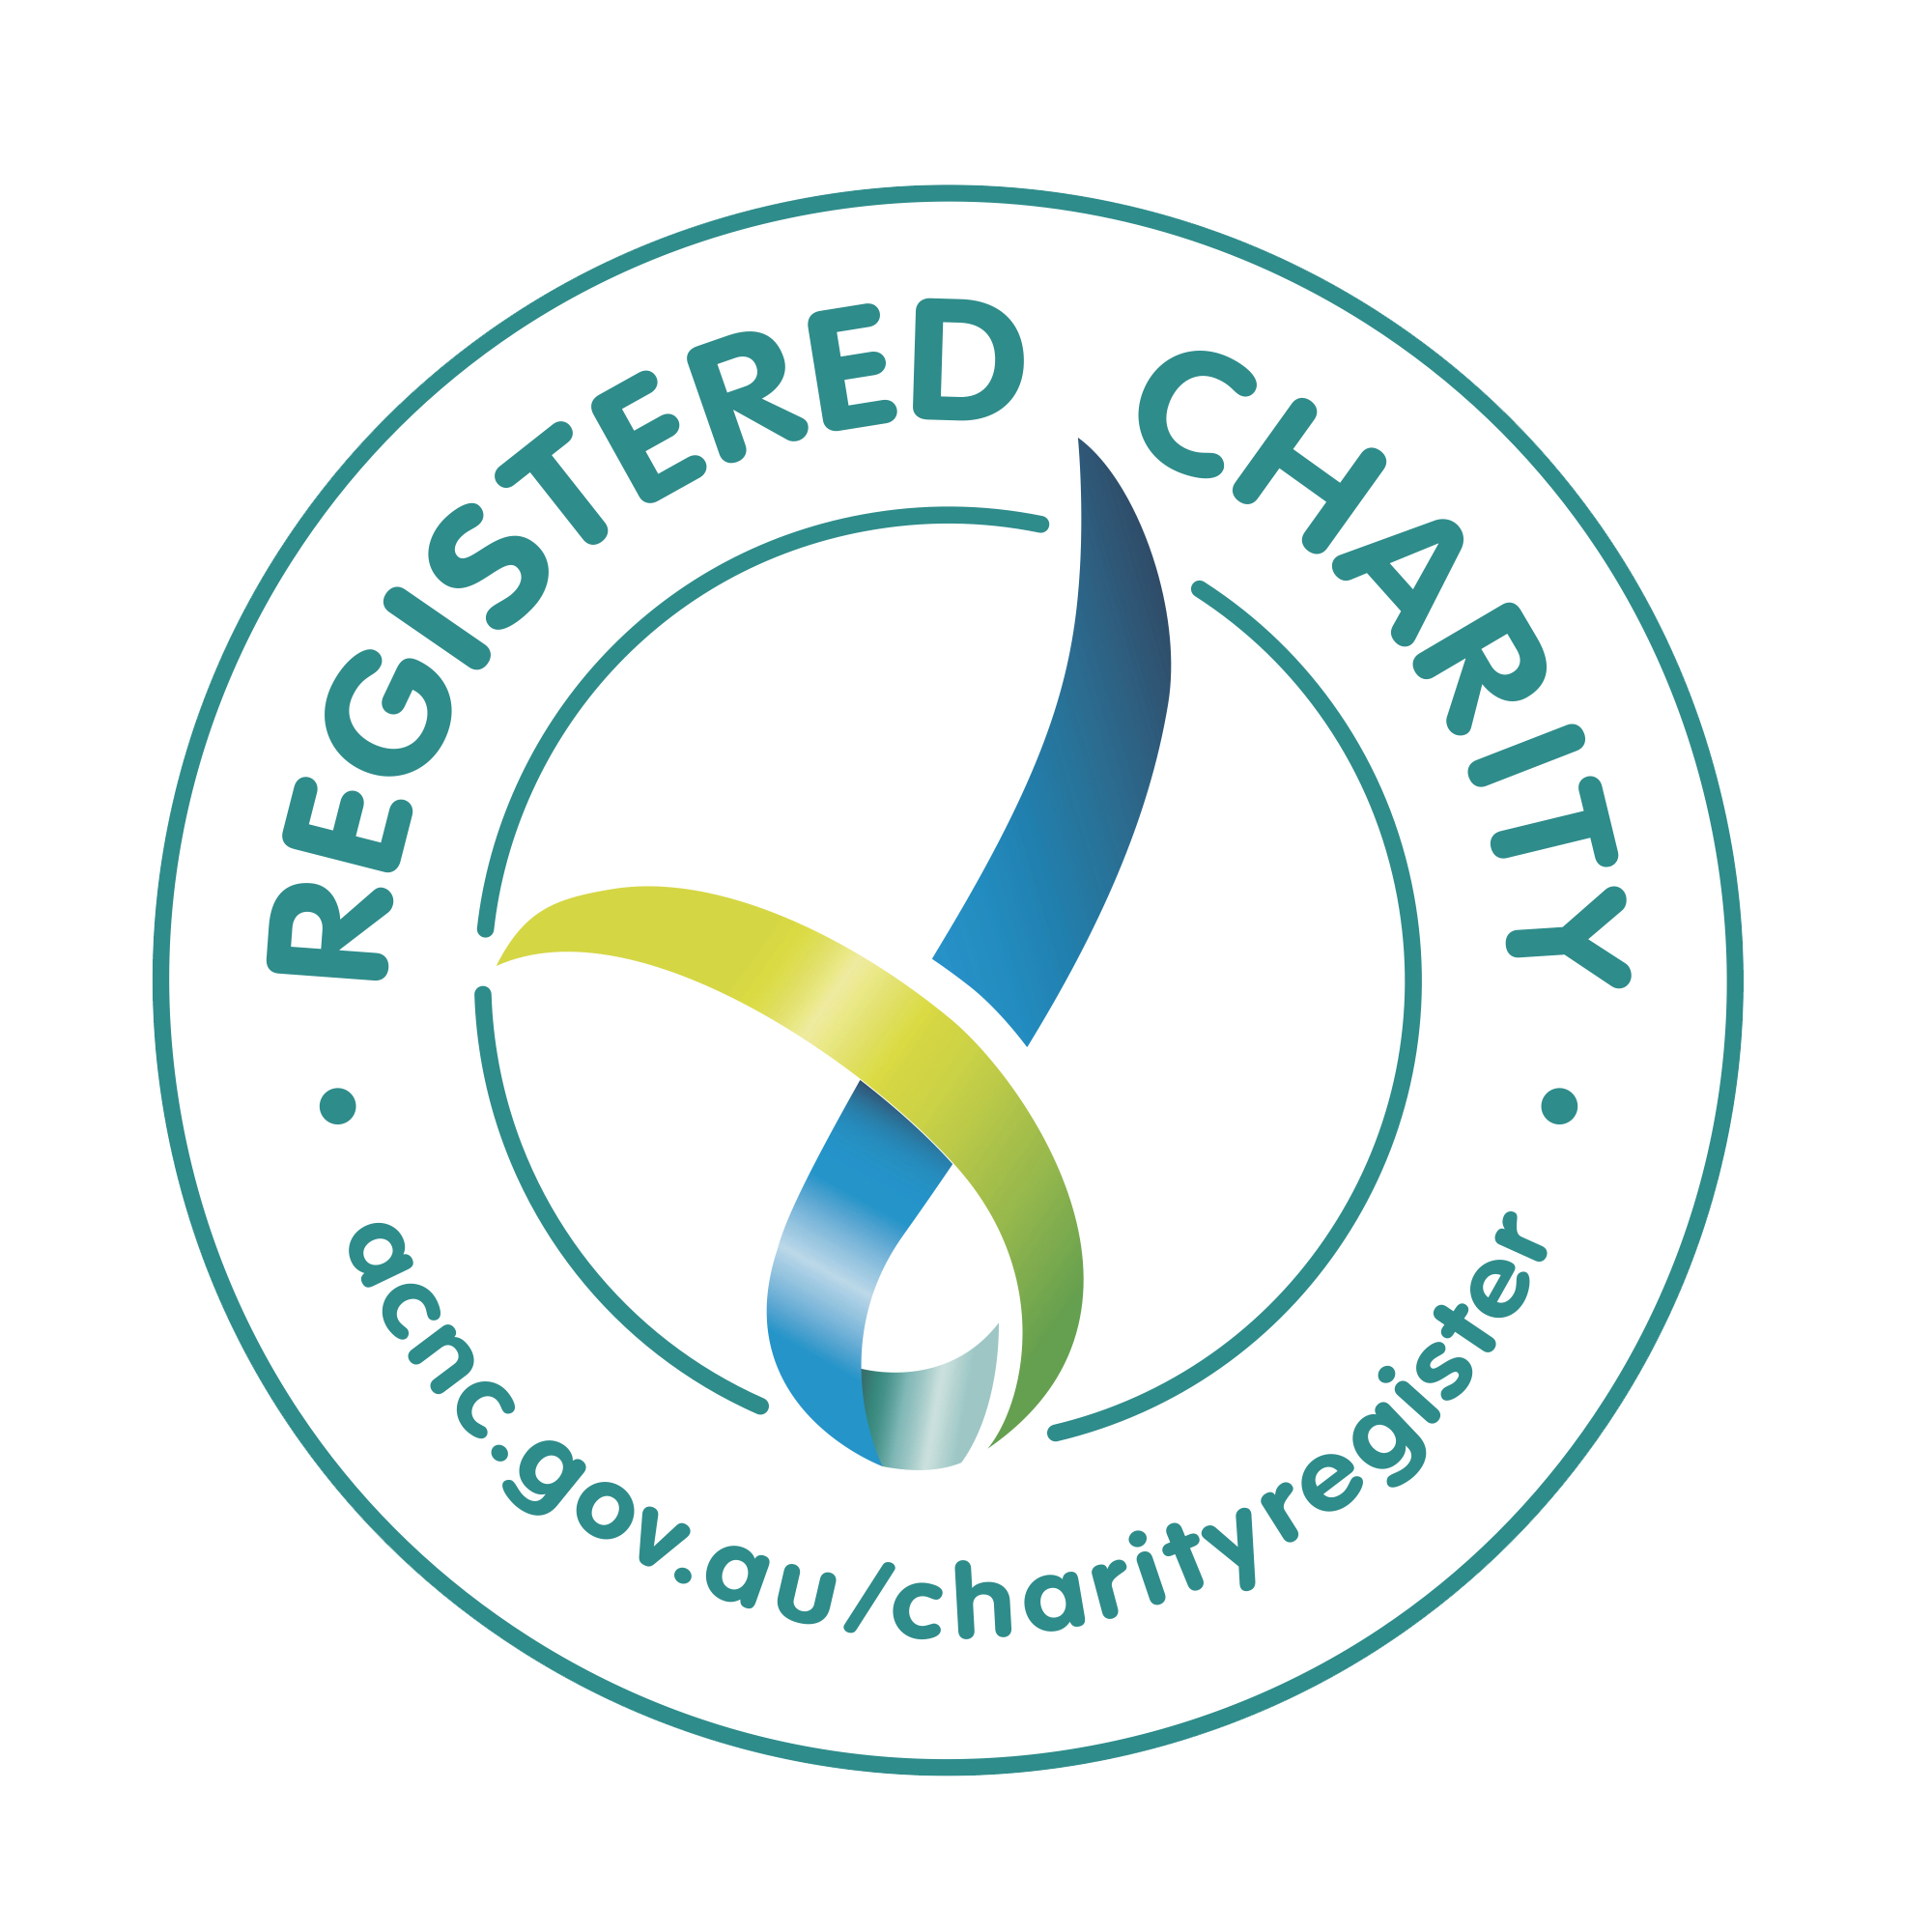 ACNC logo, registered charity, acnc.gov.au/charityregister